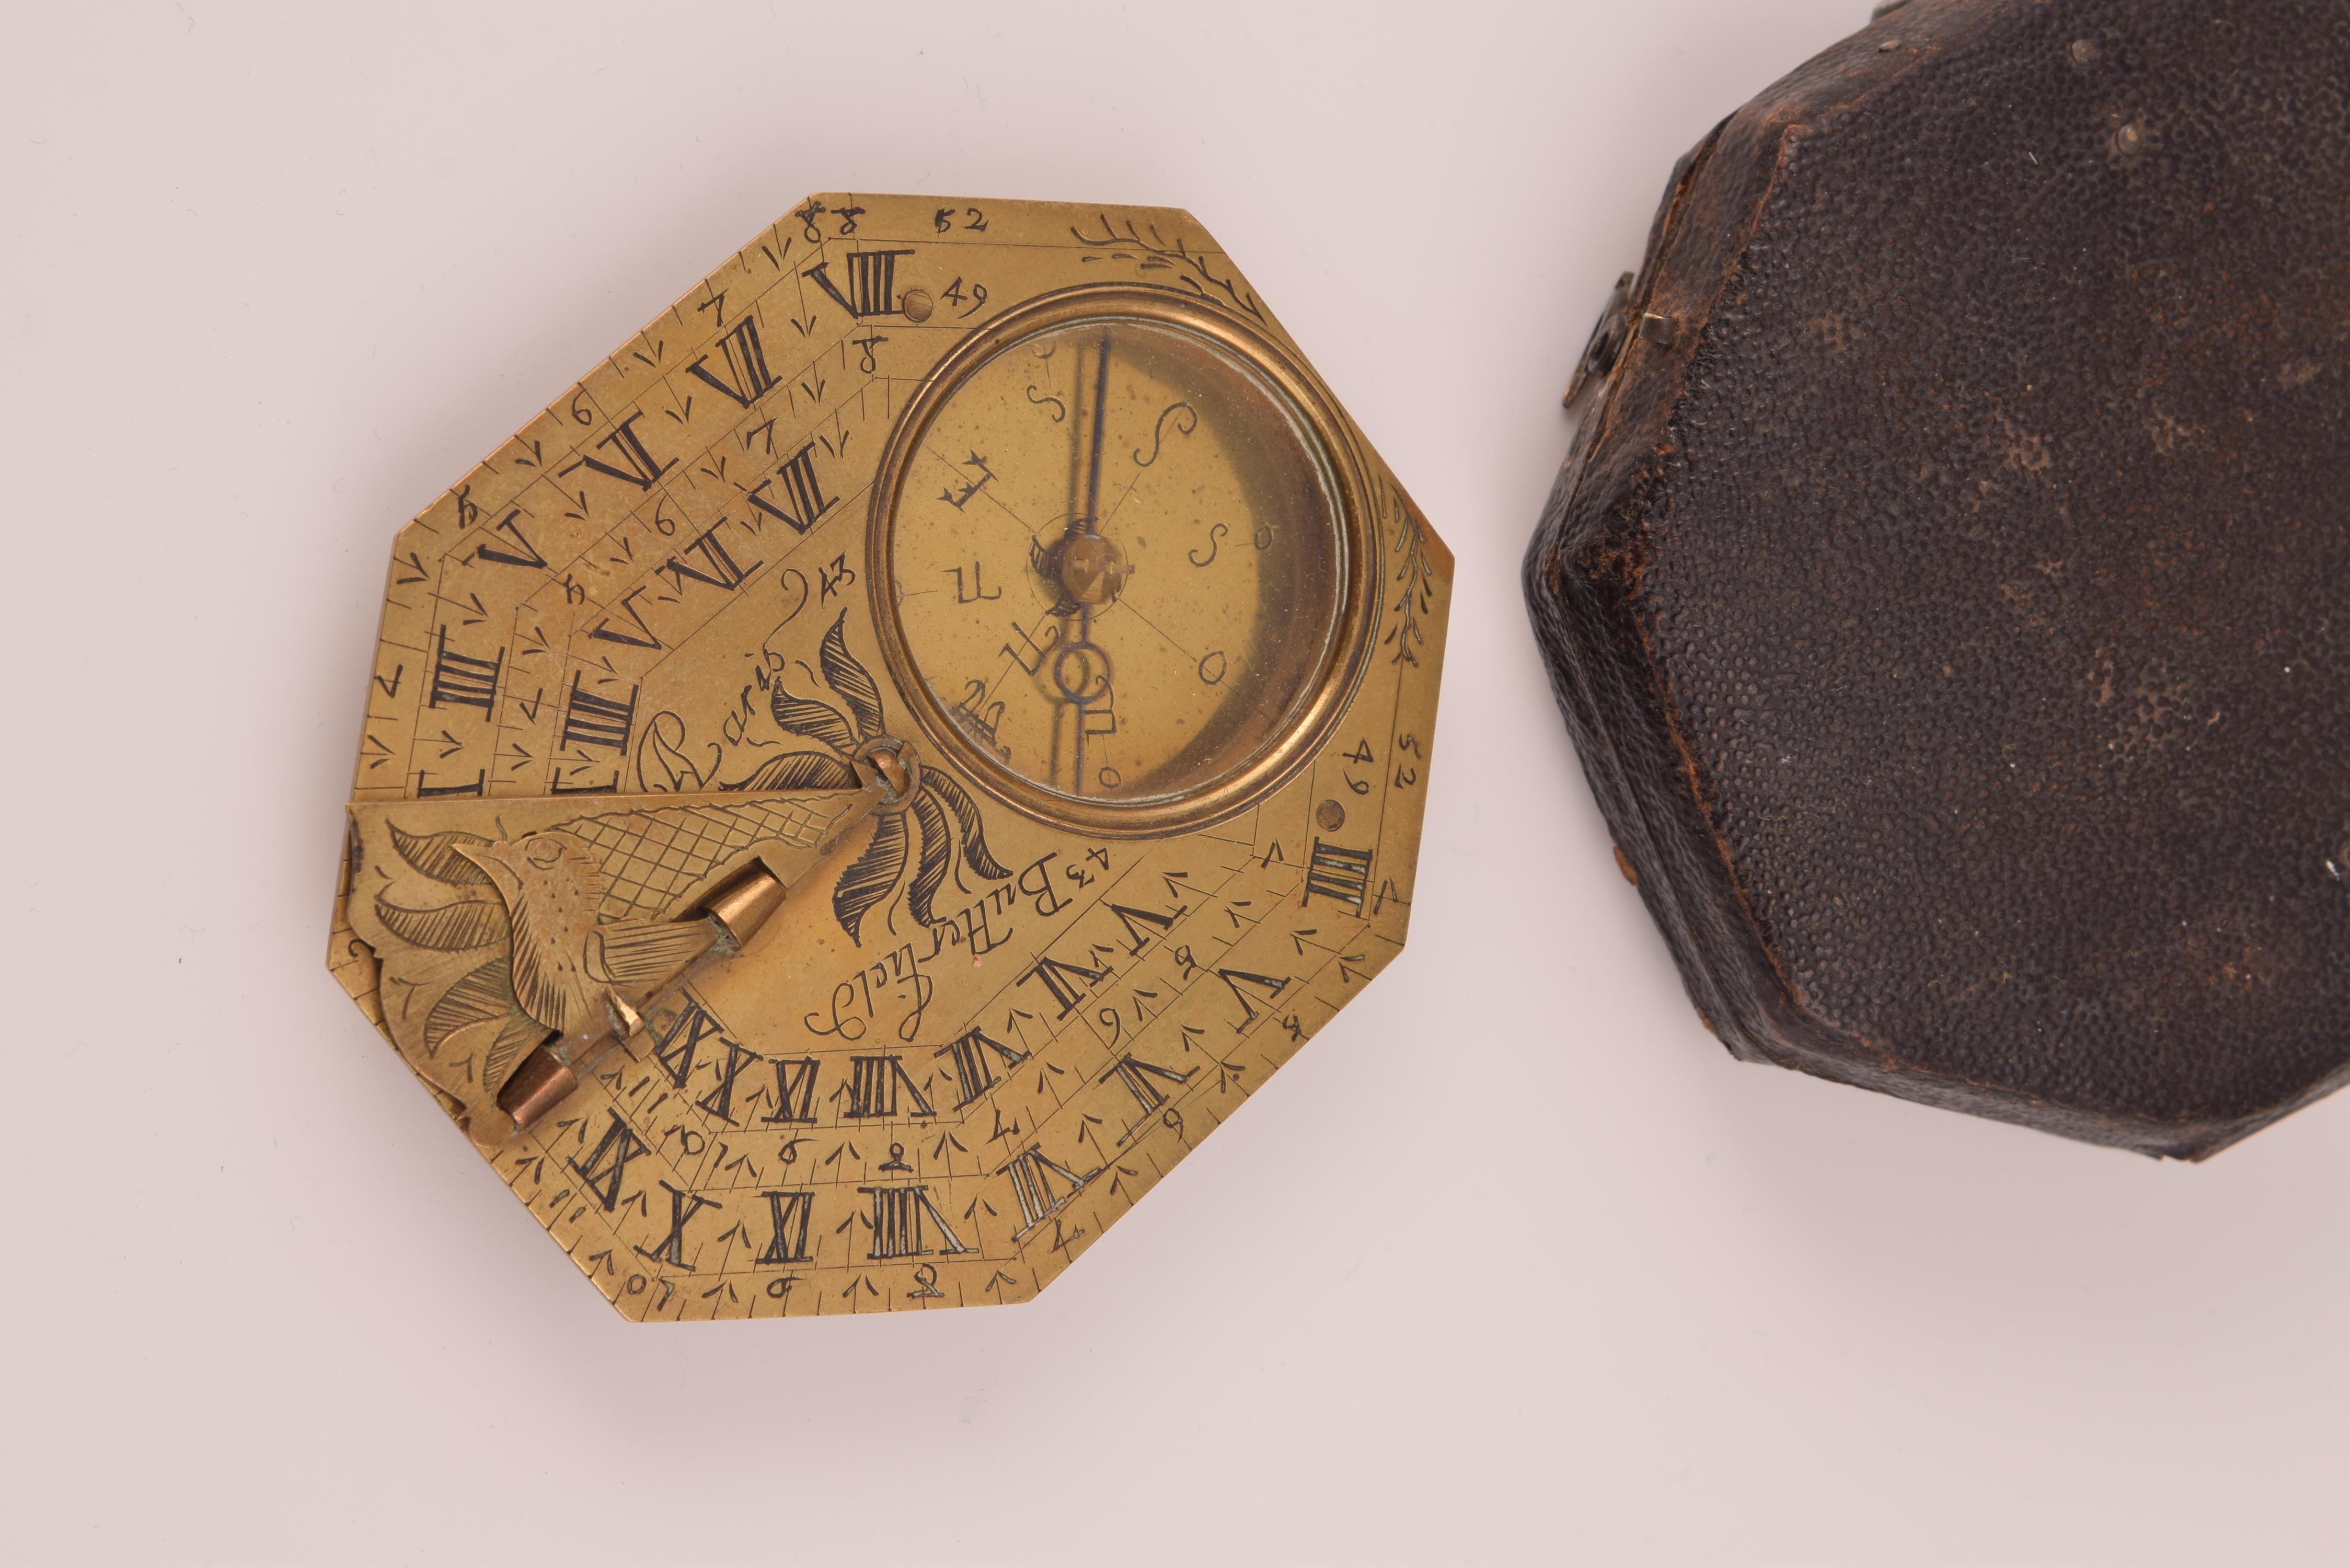 1700s compass